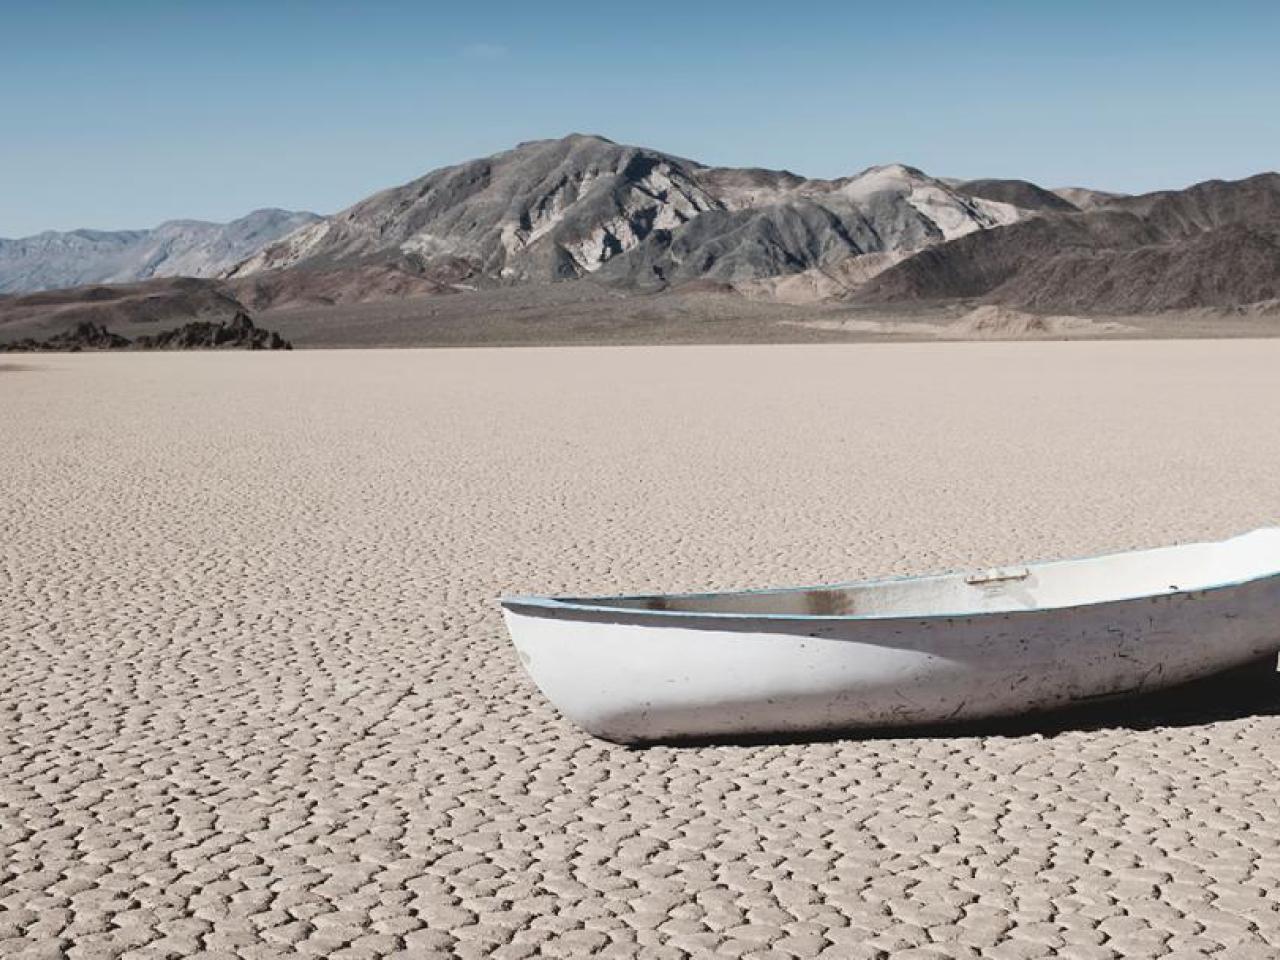 A small boat in a barren desert landscape.